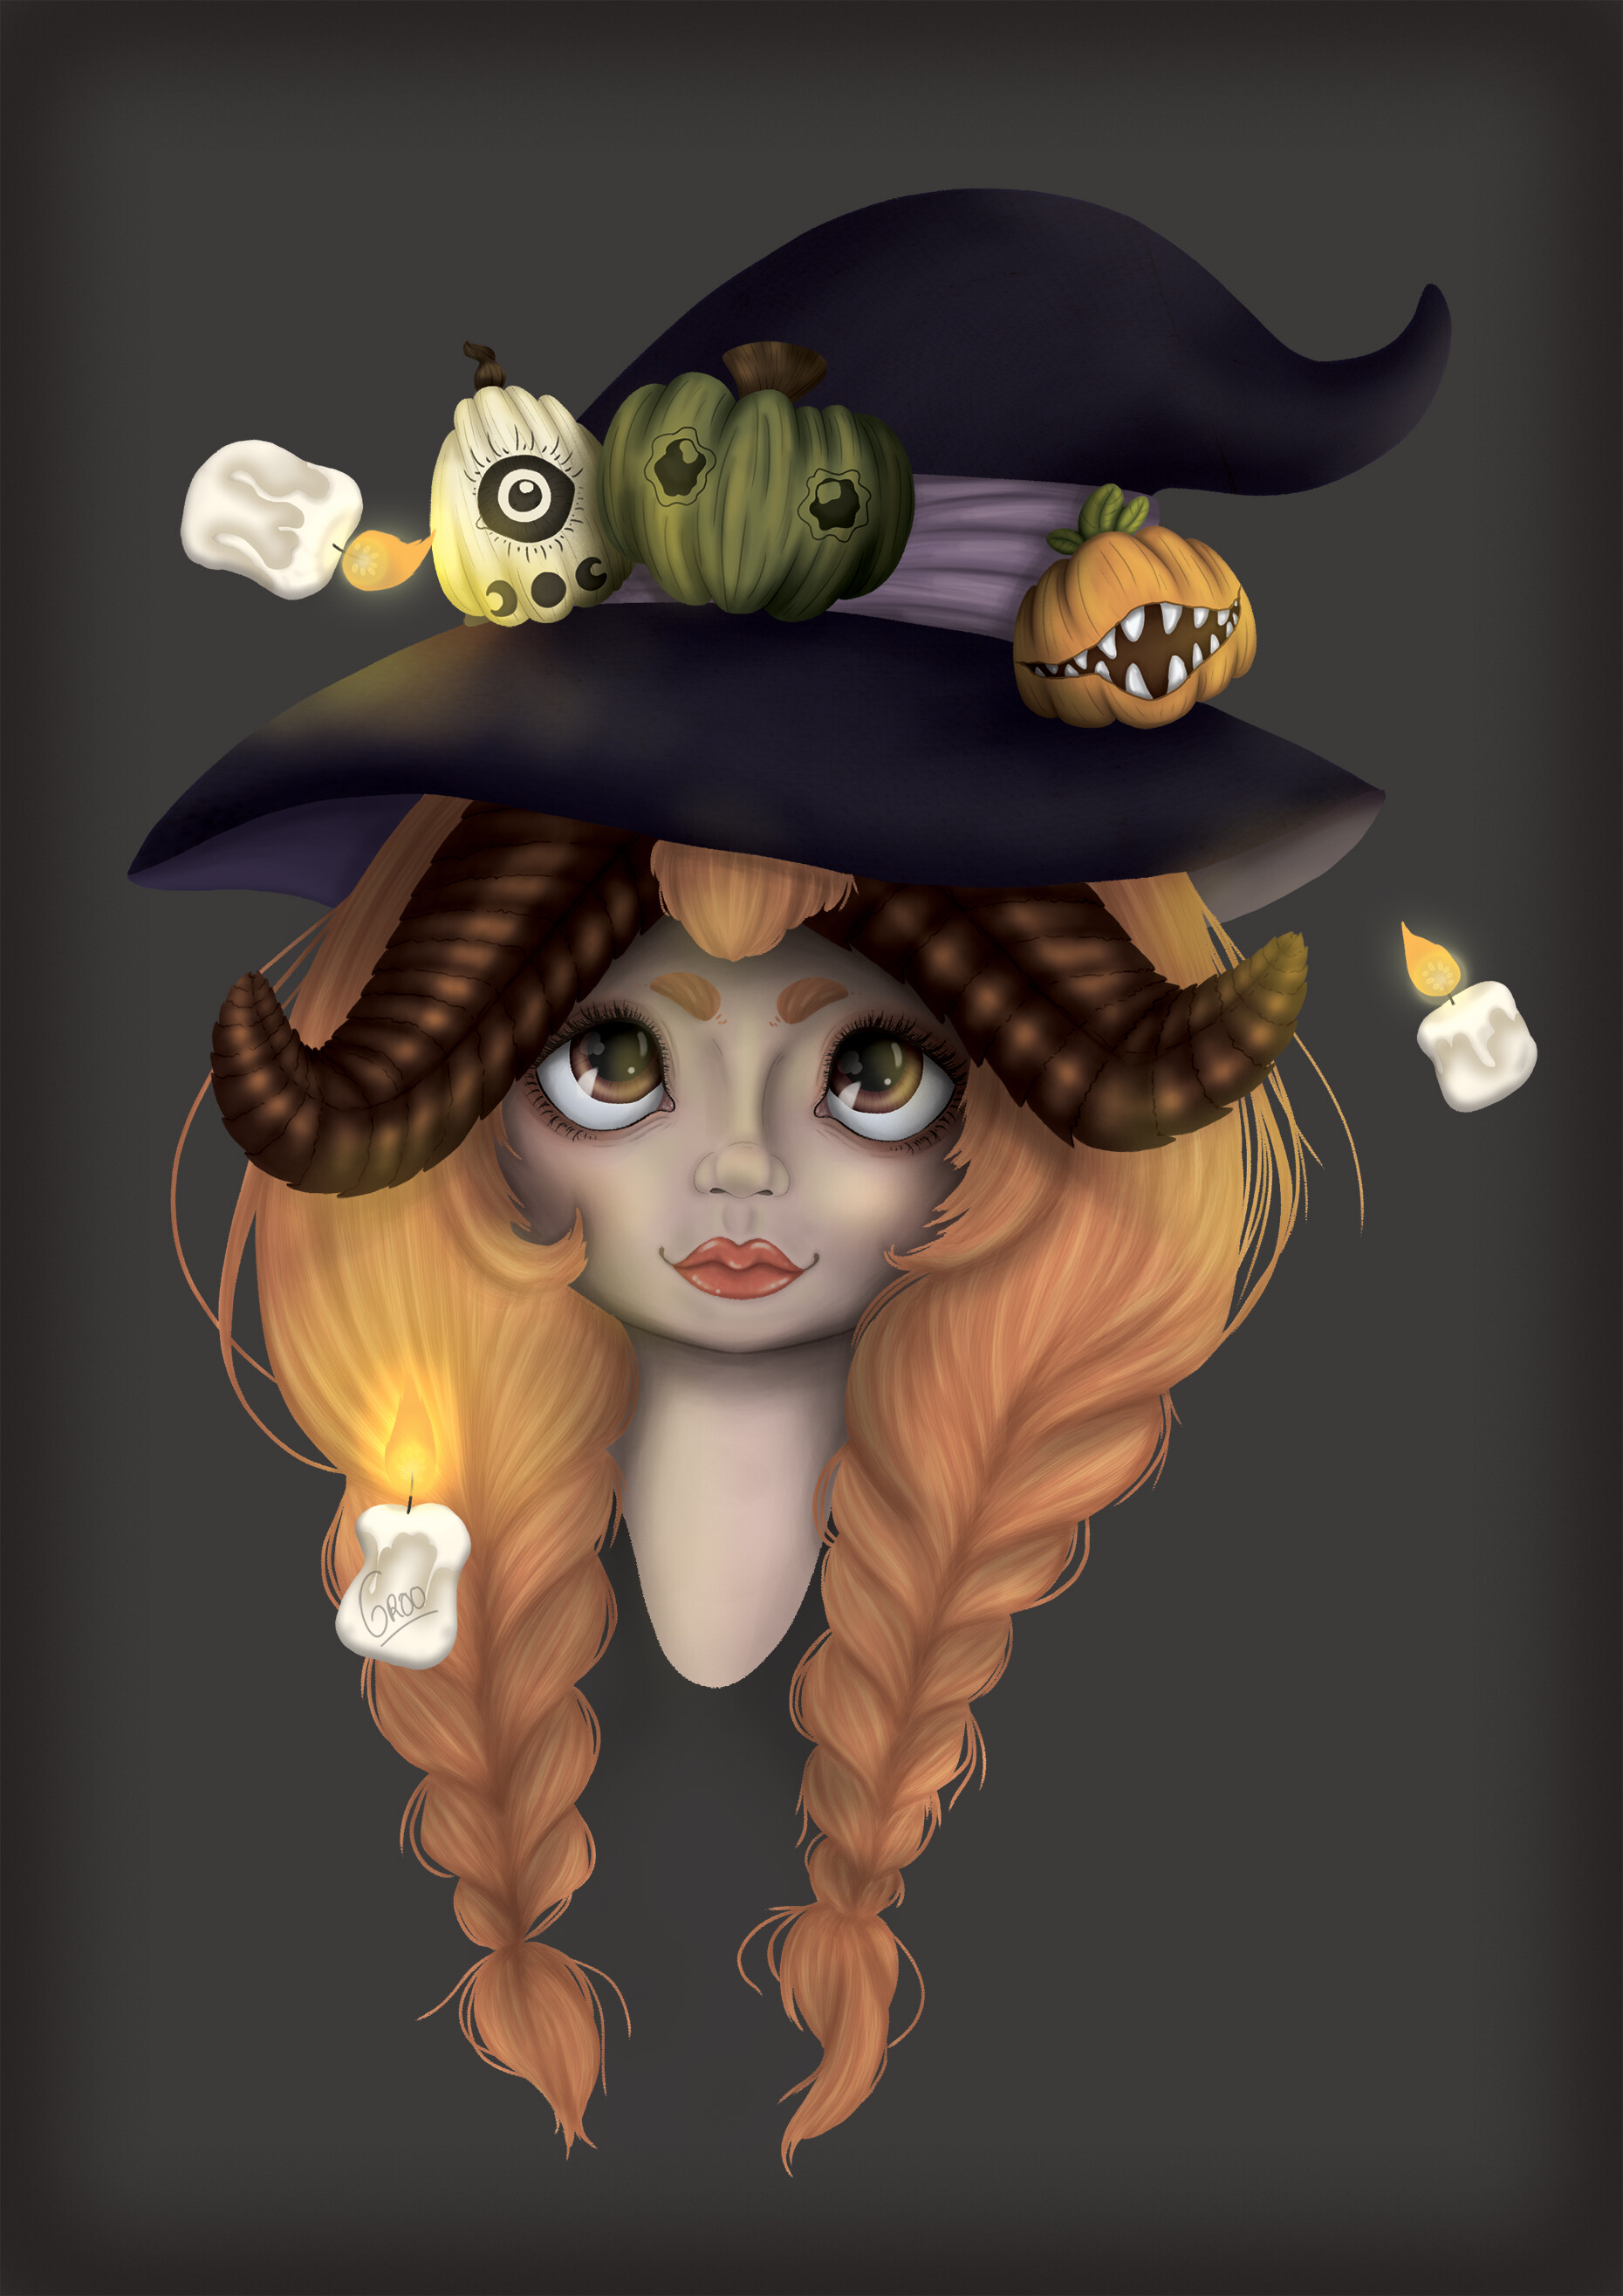 ArtStation - Witch and pumpkin friends